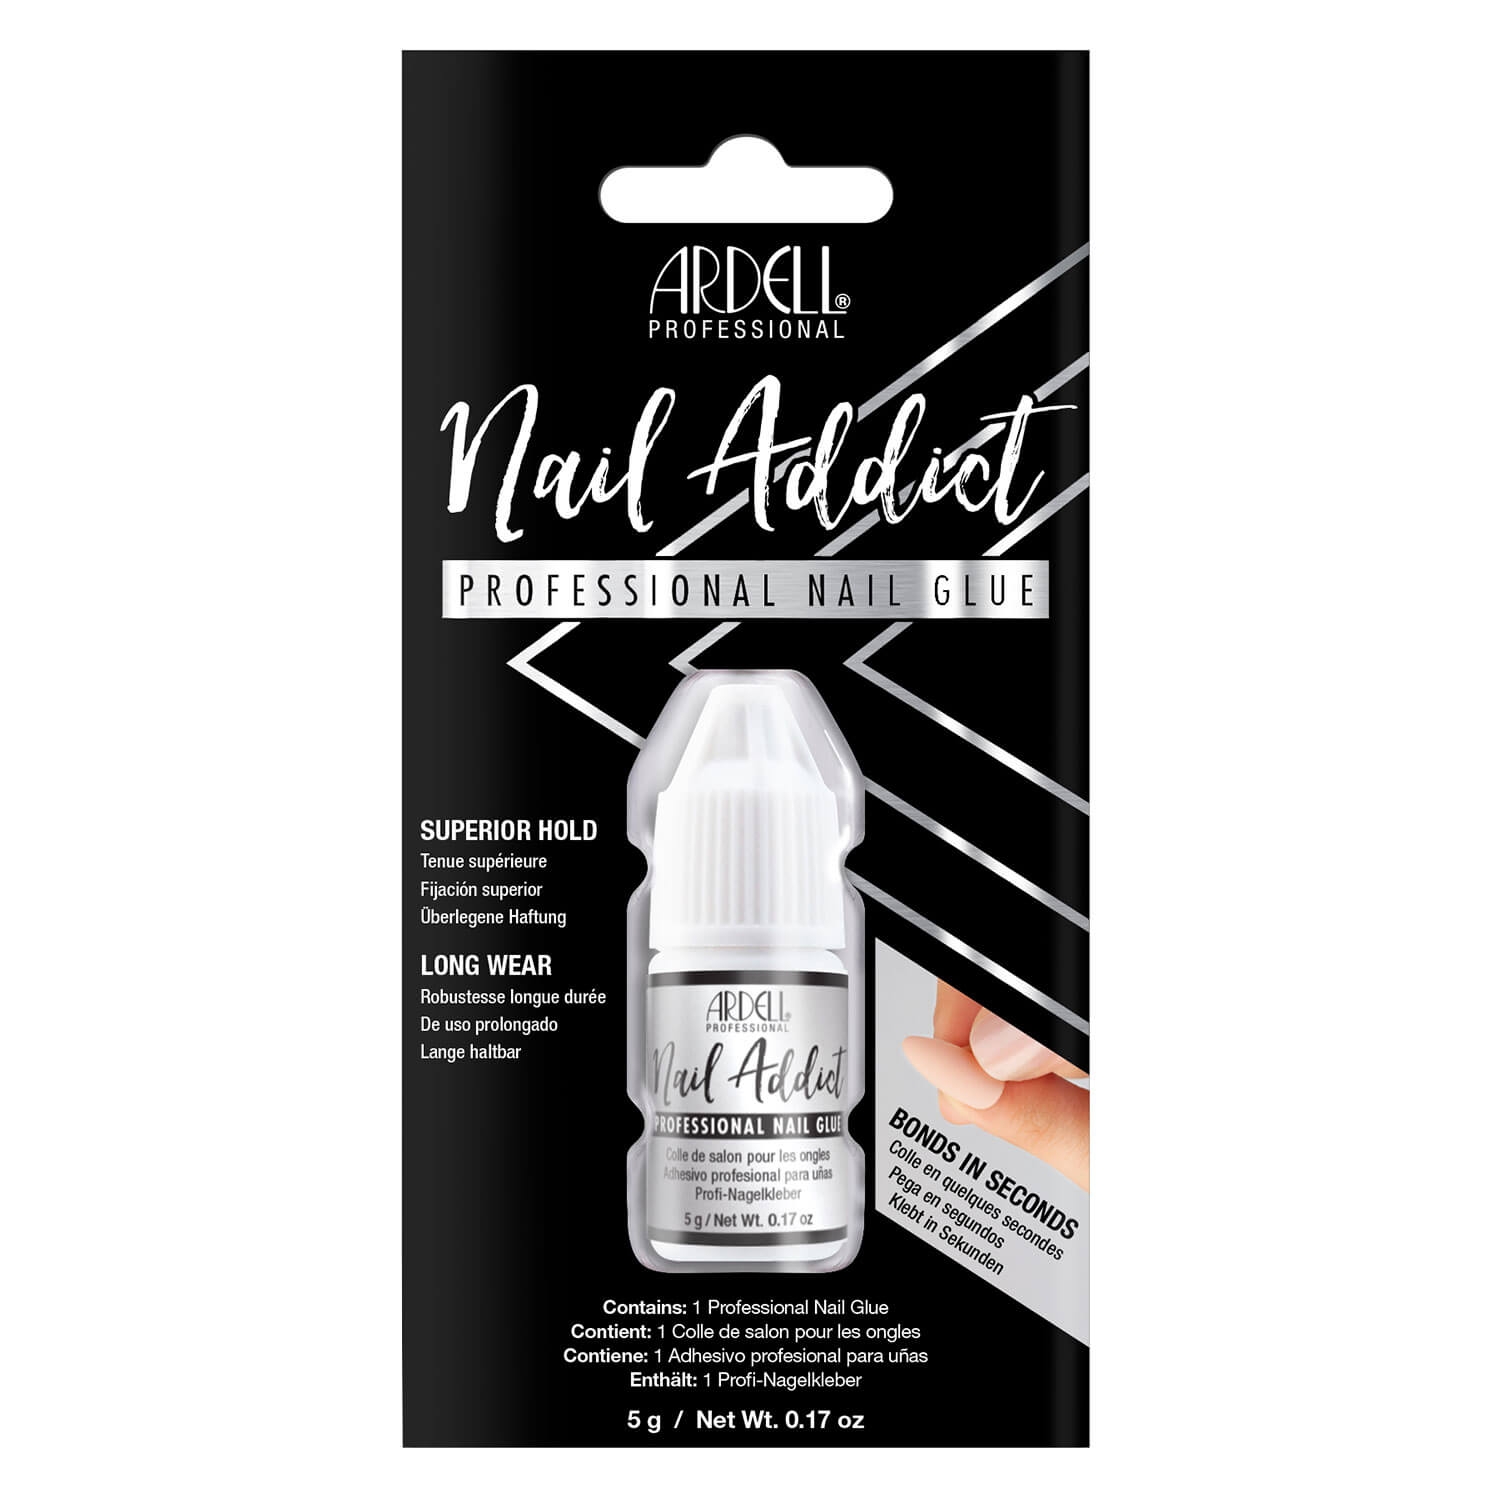 Produktbild von Nail Addict - Nail Addict Professional Nail Glue